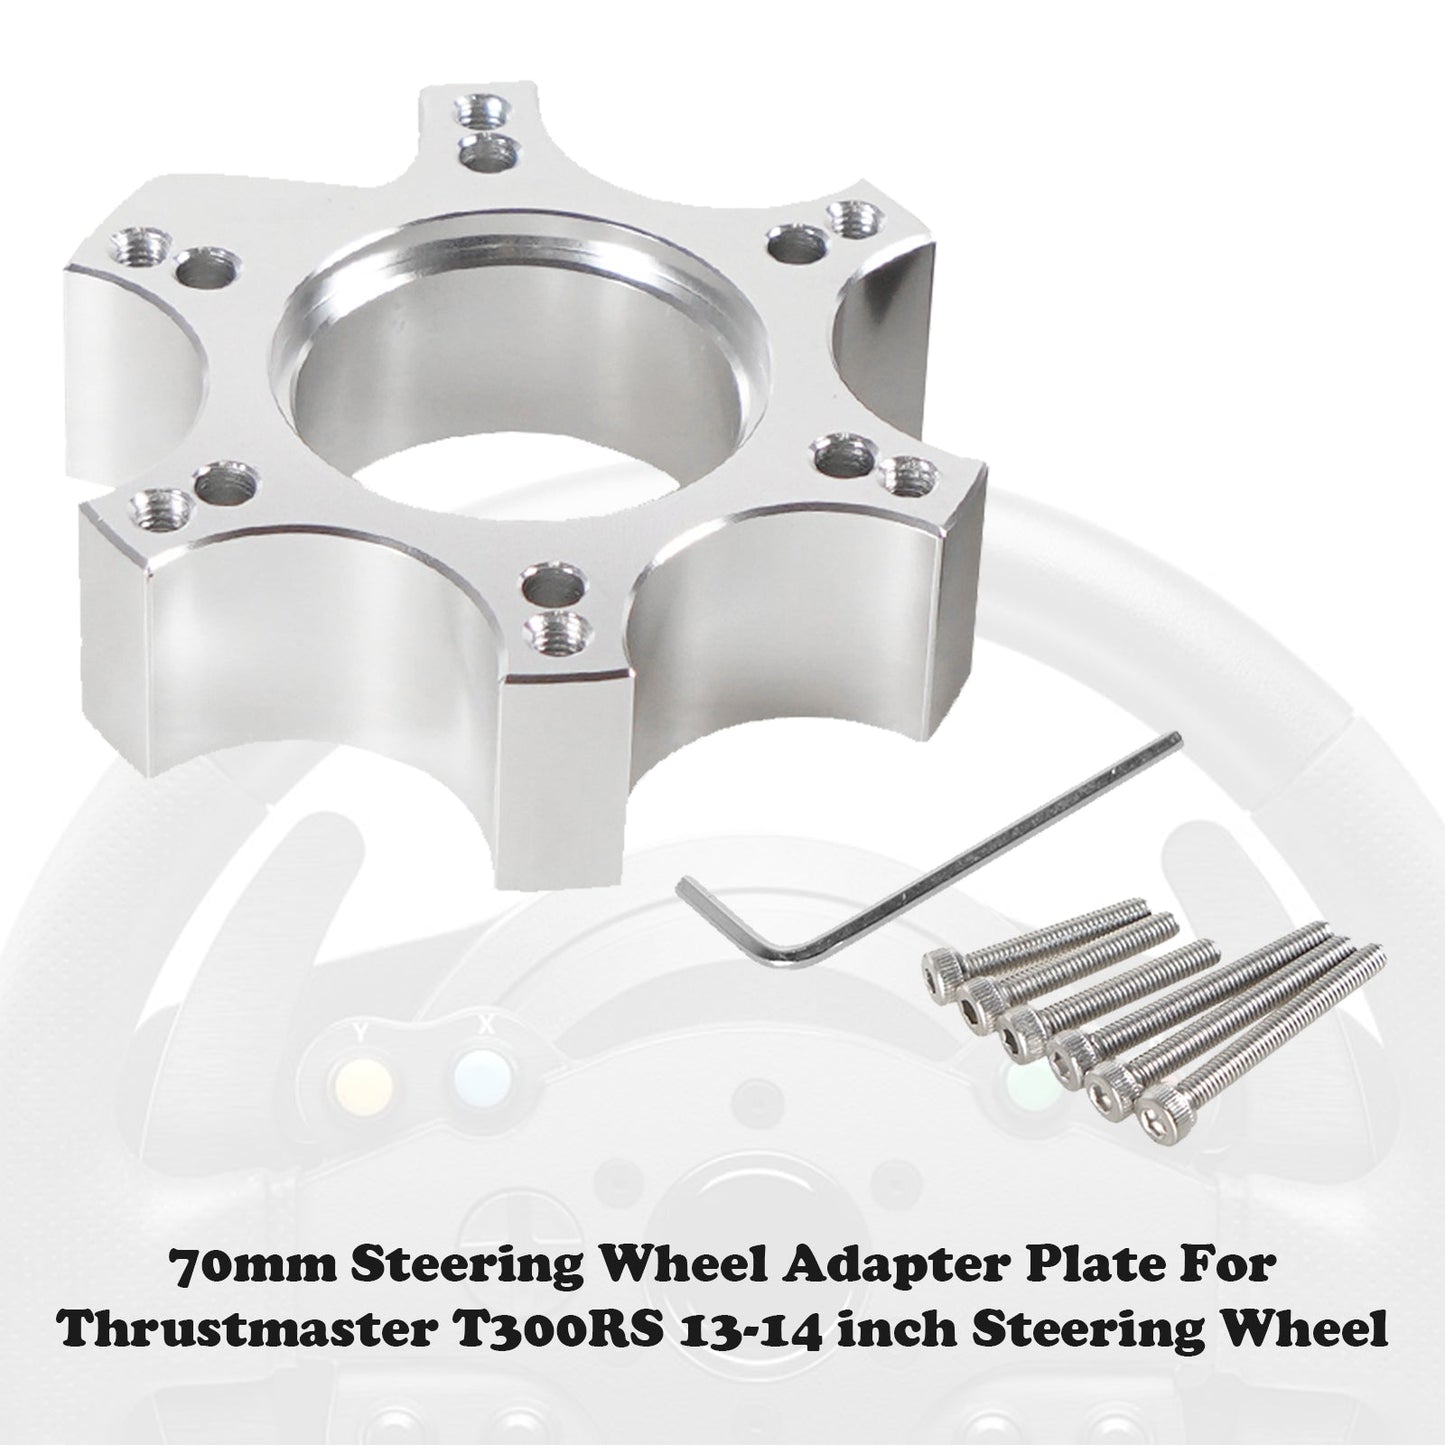 70mm Steering Wheel Adapter Plate For Thrustmaster T300RS 13/14in Steering Wheel